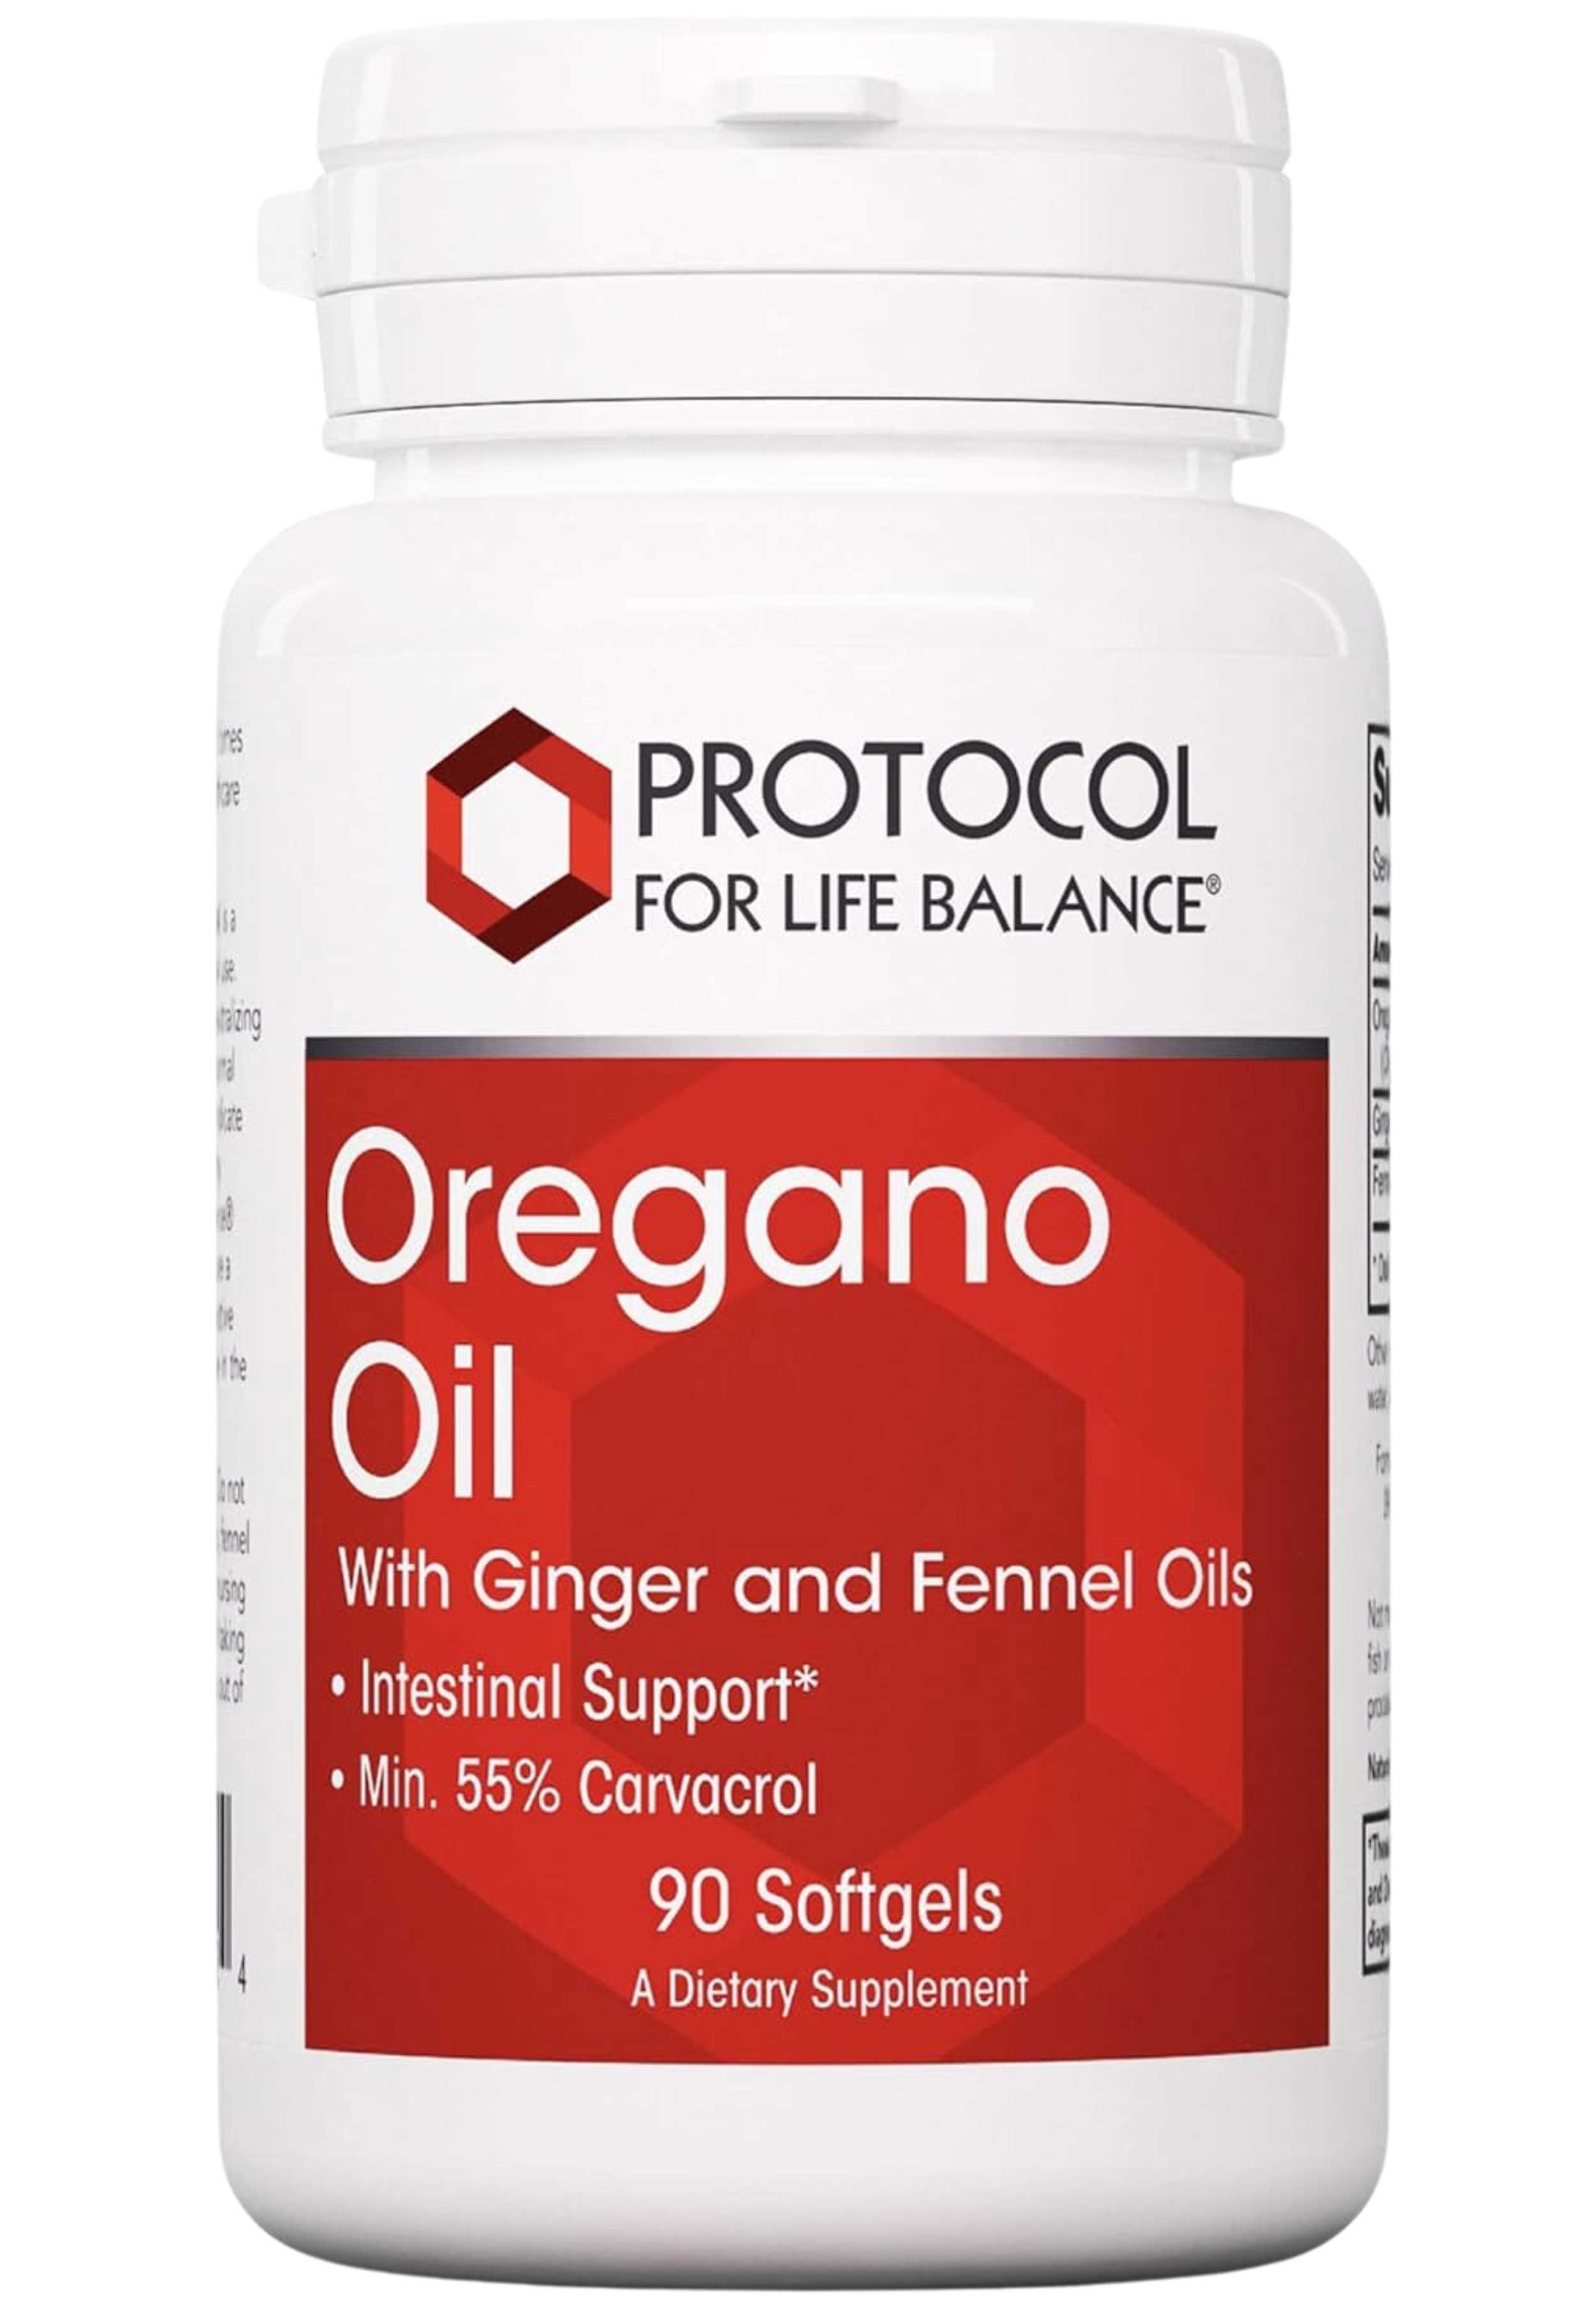 Protocol for Life Balance Oregano Oil